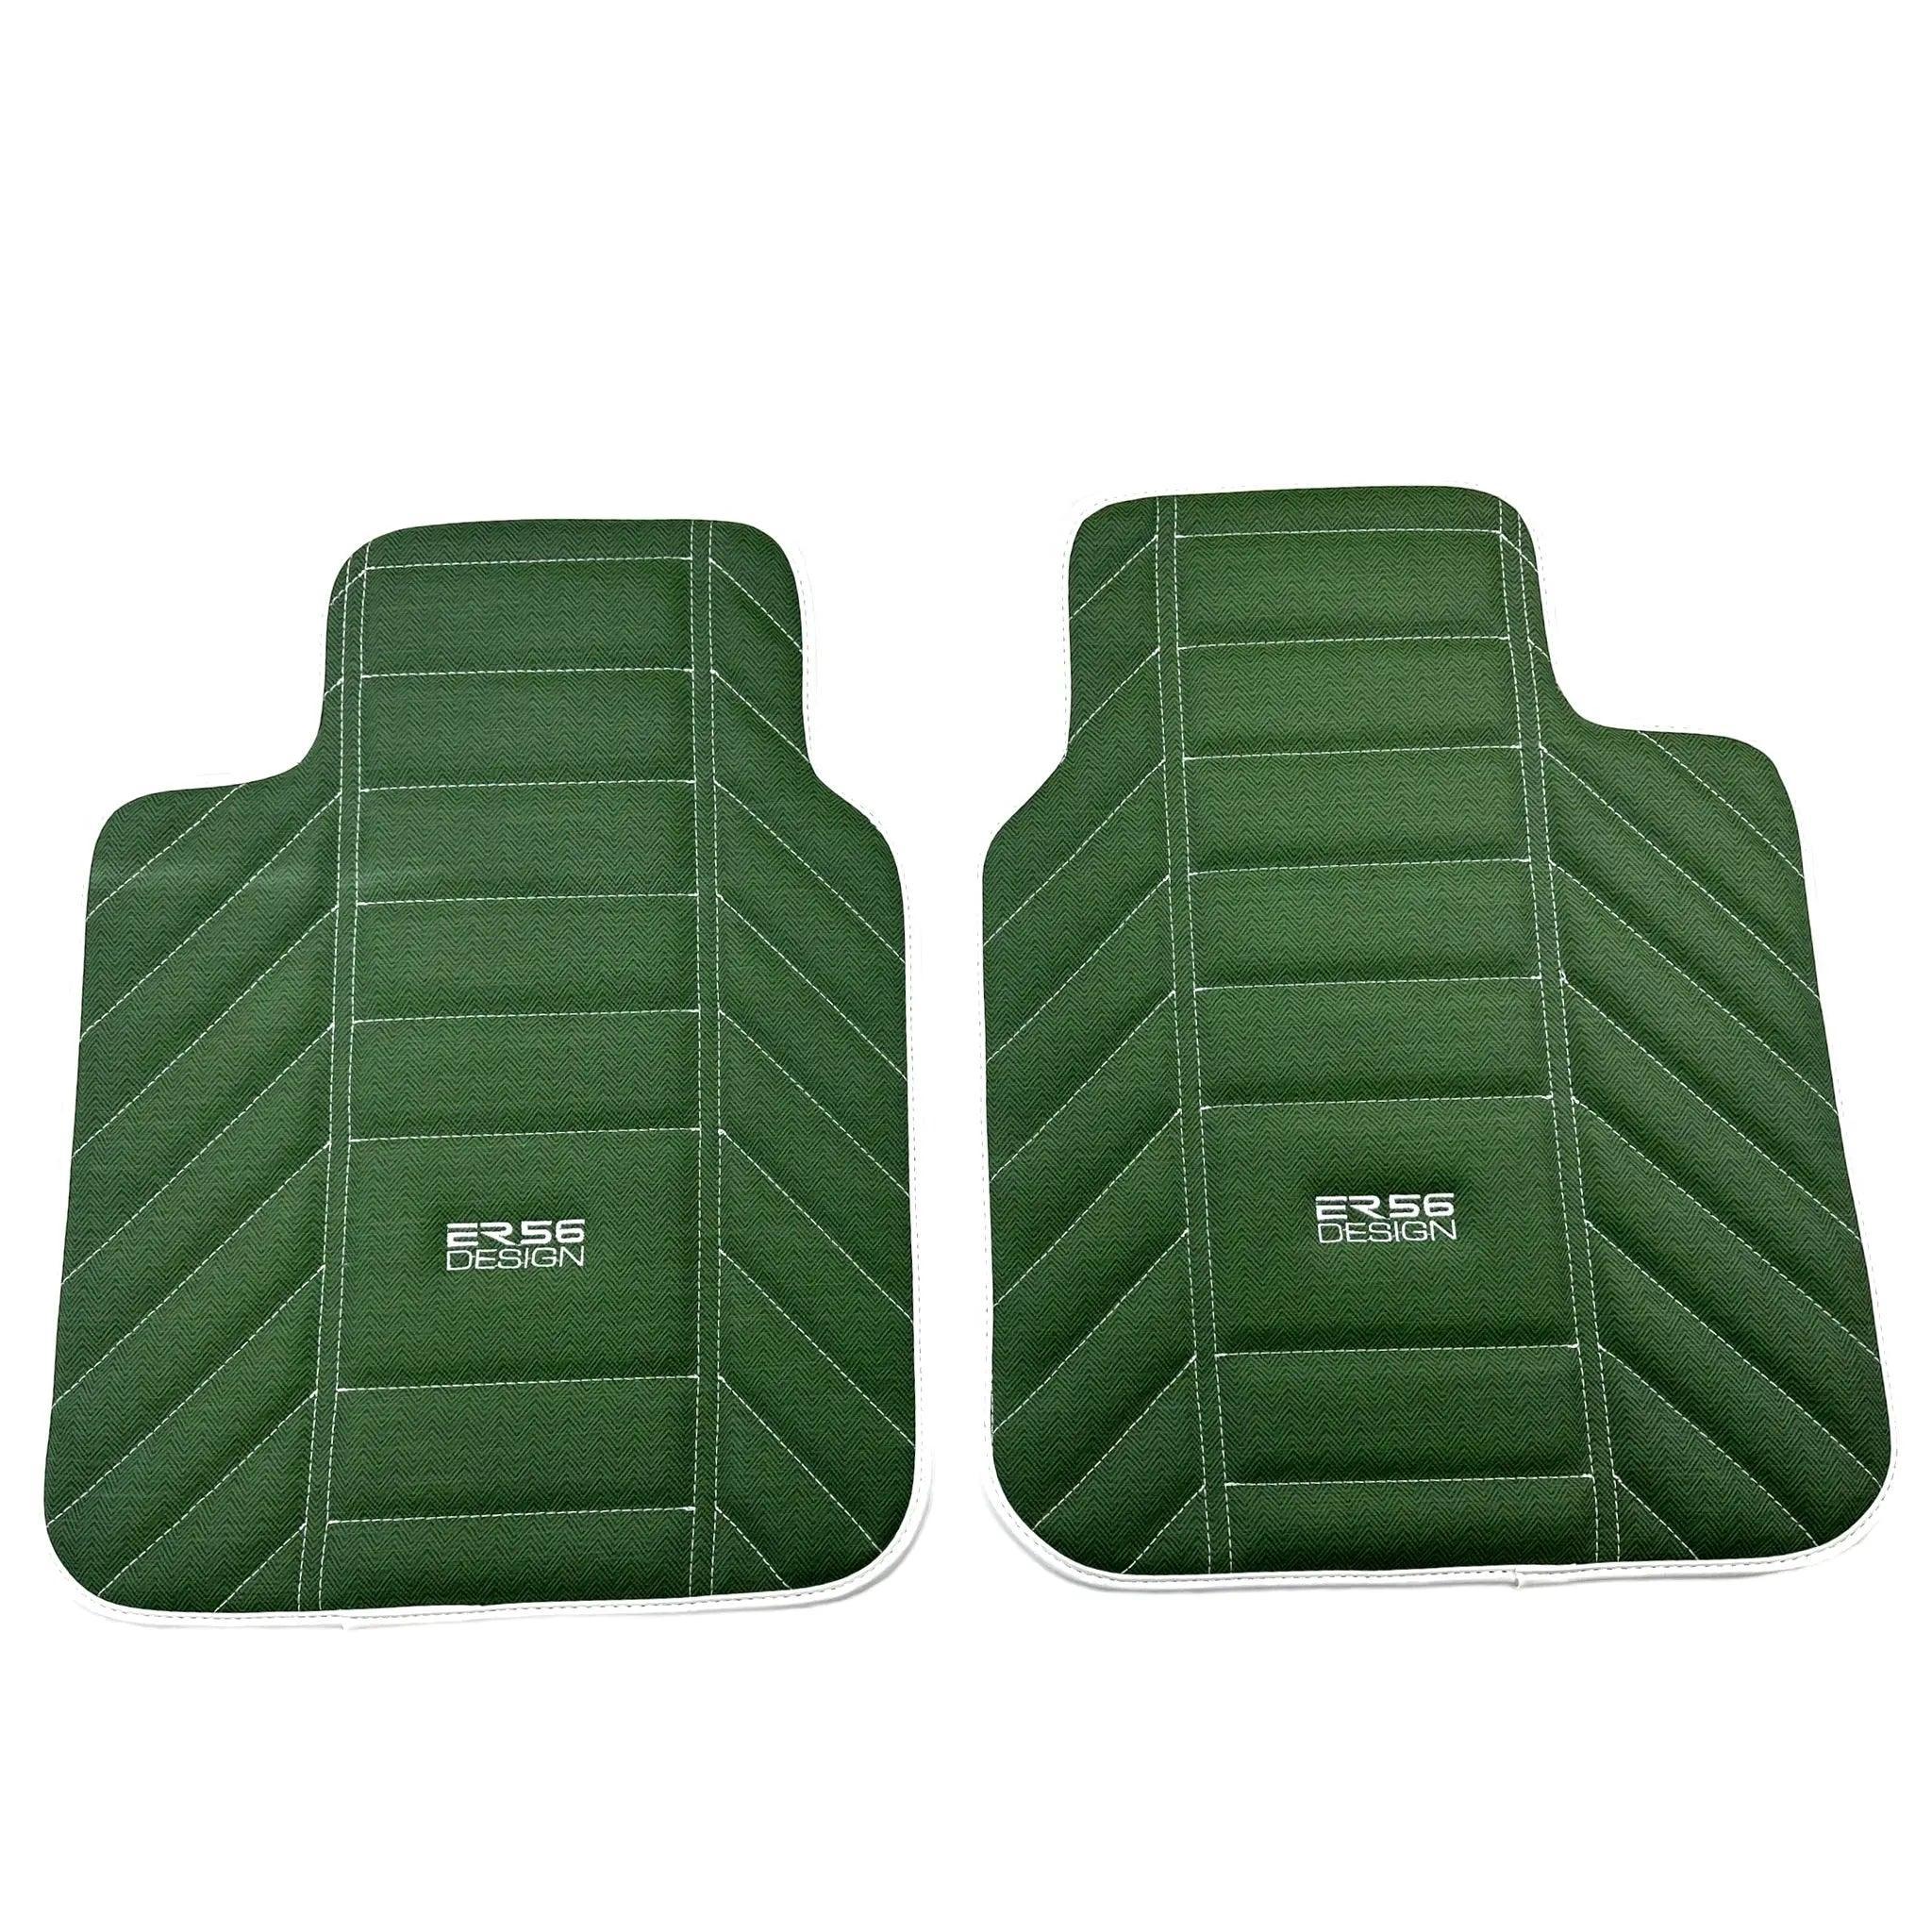 Green Leather Floor Mats For Rolls-Royce Cullinan Rr31 2018-2023 ER56 Design